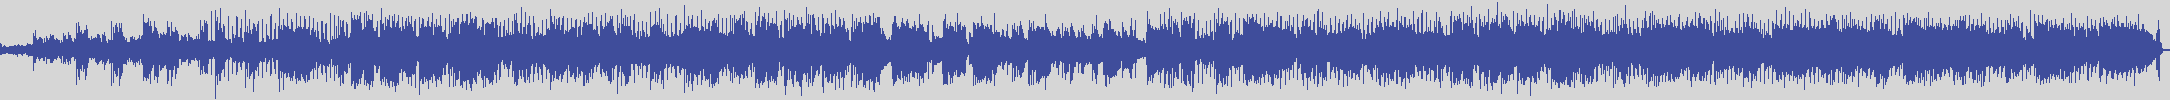 digiphonic_records [DPR013] Little Tony - Suspicious Minds [Original Mix] audio wave form